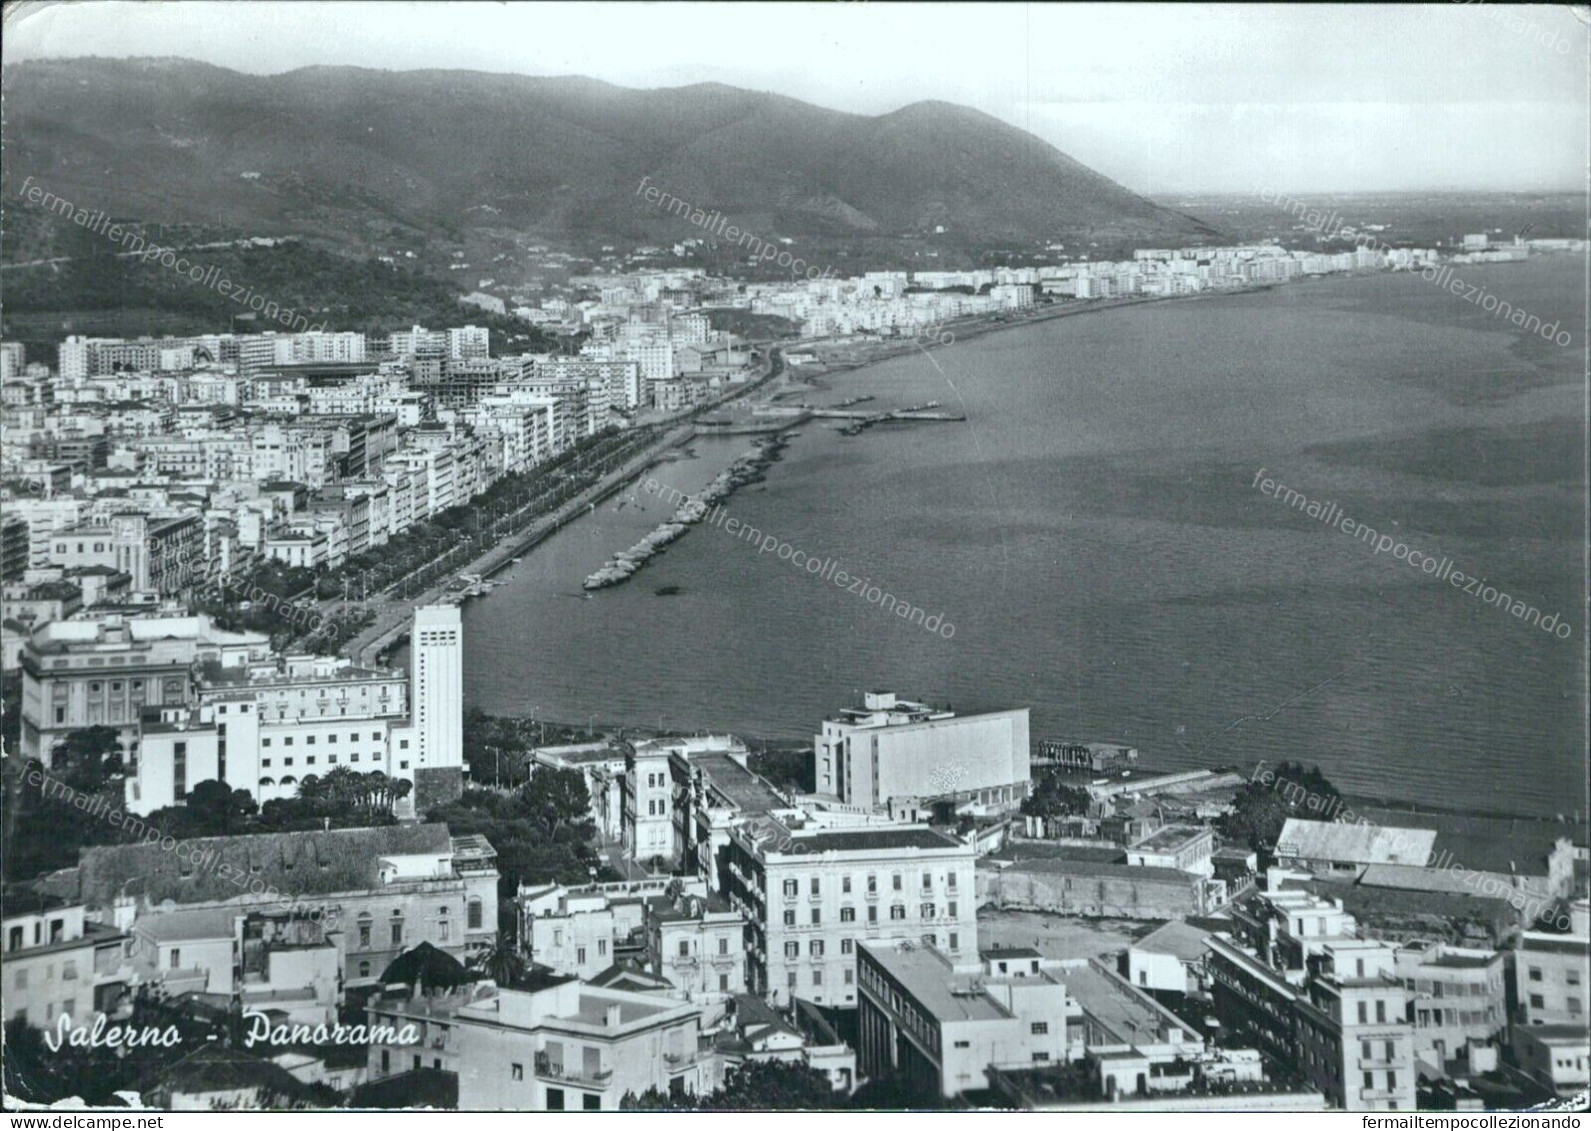 Cr461 Cartolina Salerno Citta'  Panorama Campania - Salerno